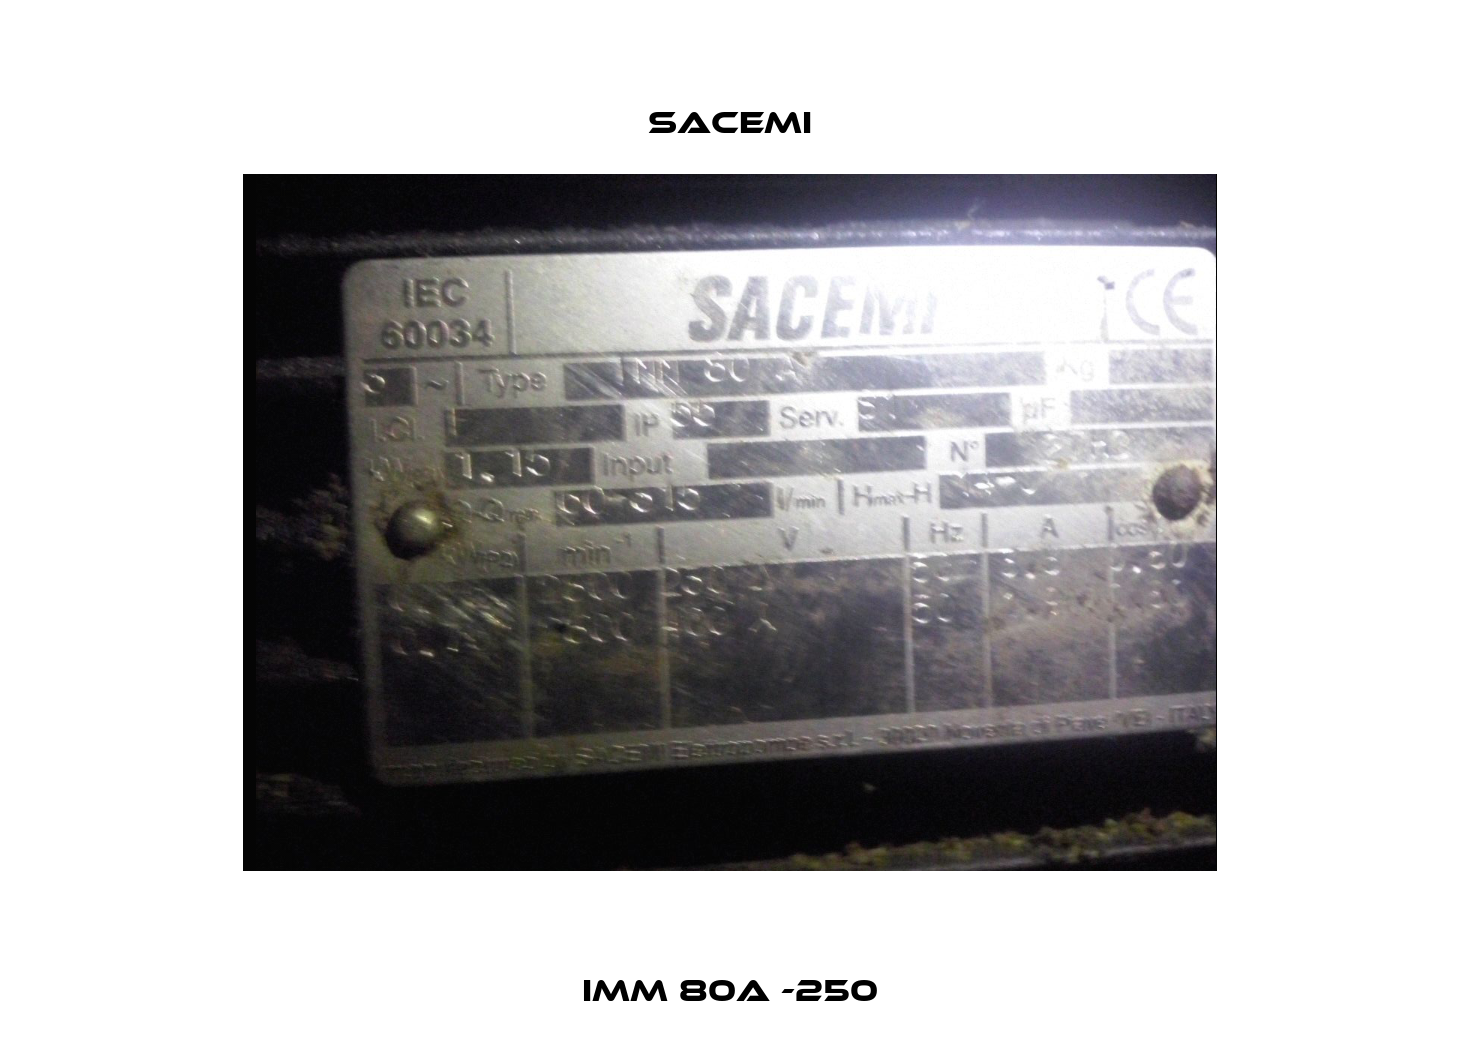 IMM 80A -250 Sacemi